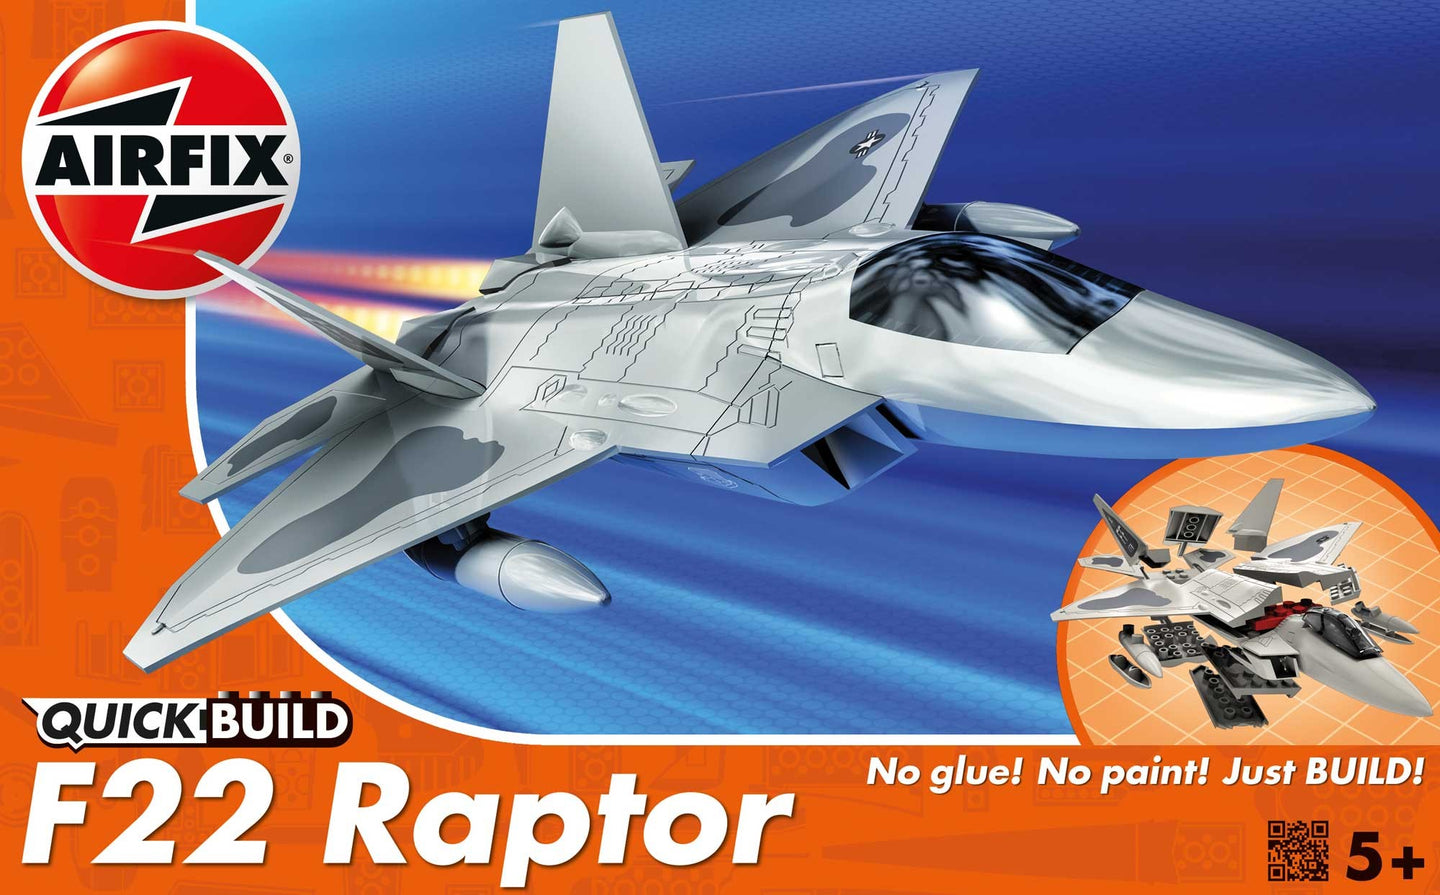 Airfix QuickBuild Snap US F-22 Raptor J6005R-1